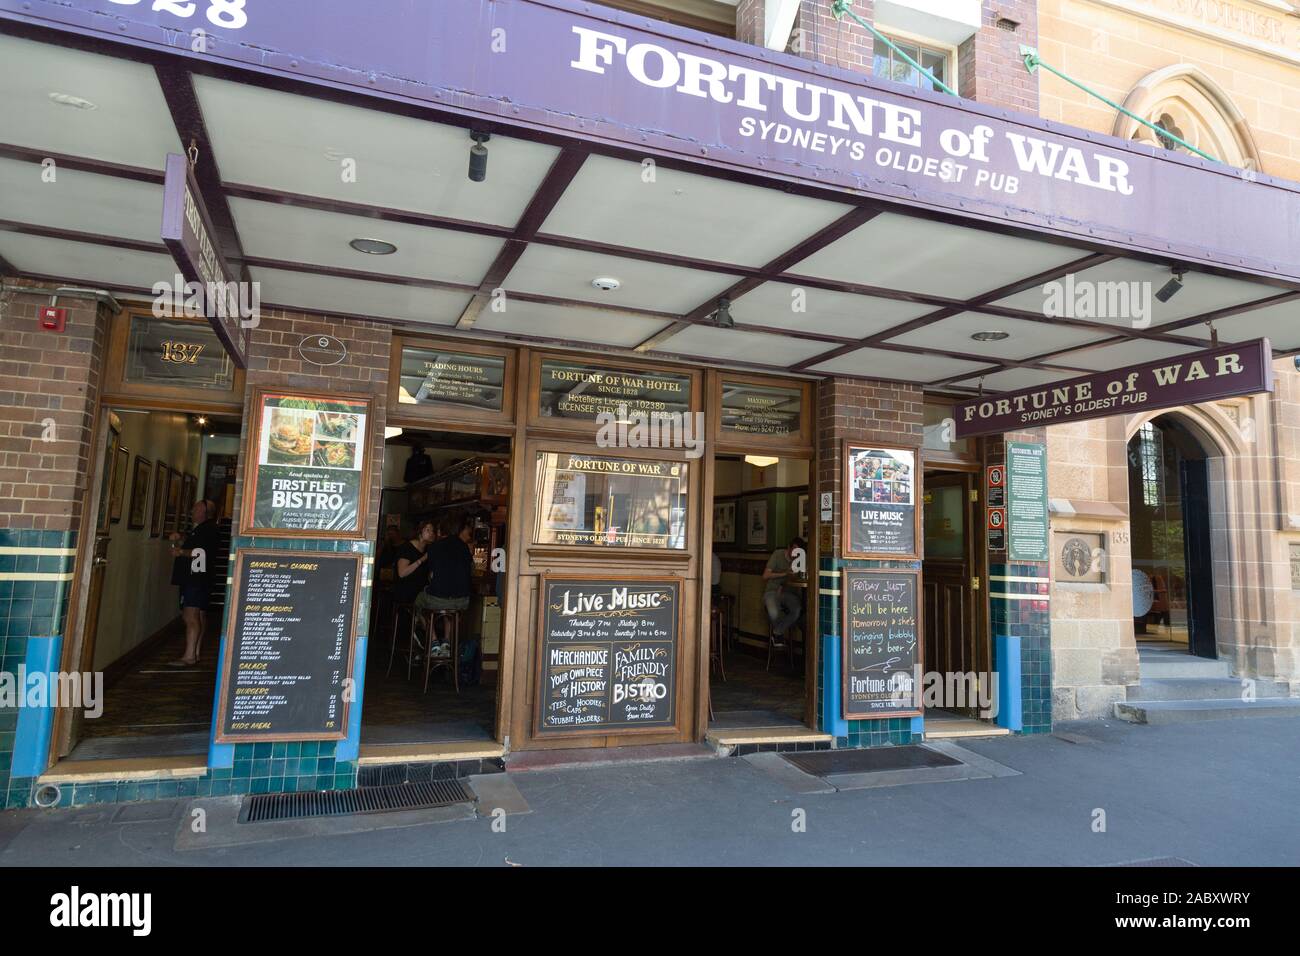 Sydney Pub; The Fortune of War, said to be Sydney's oldest pub; The Rocks, Sydney Australia Stock Photo